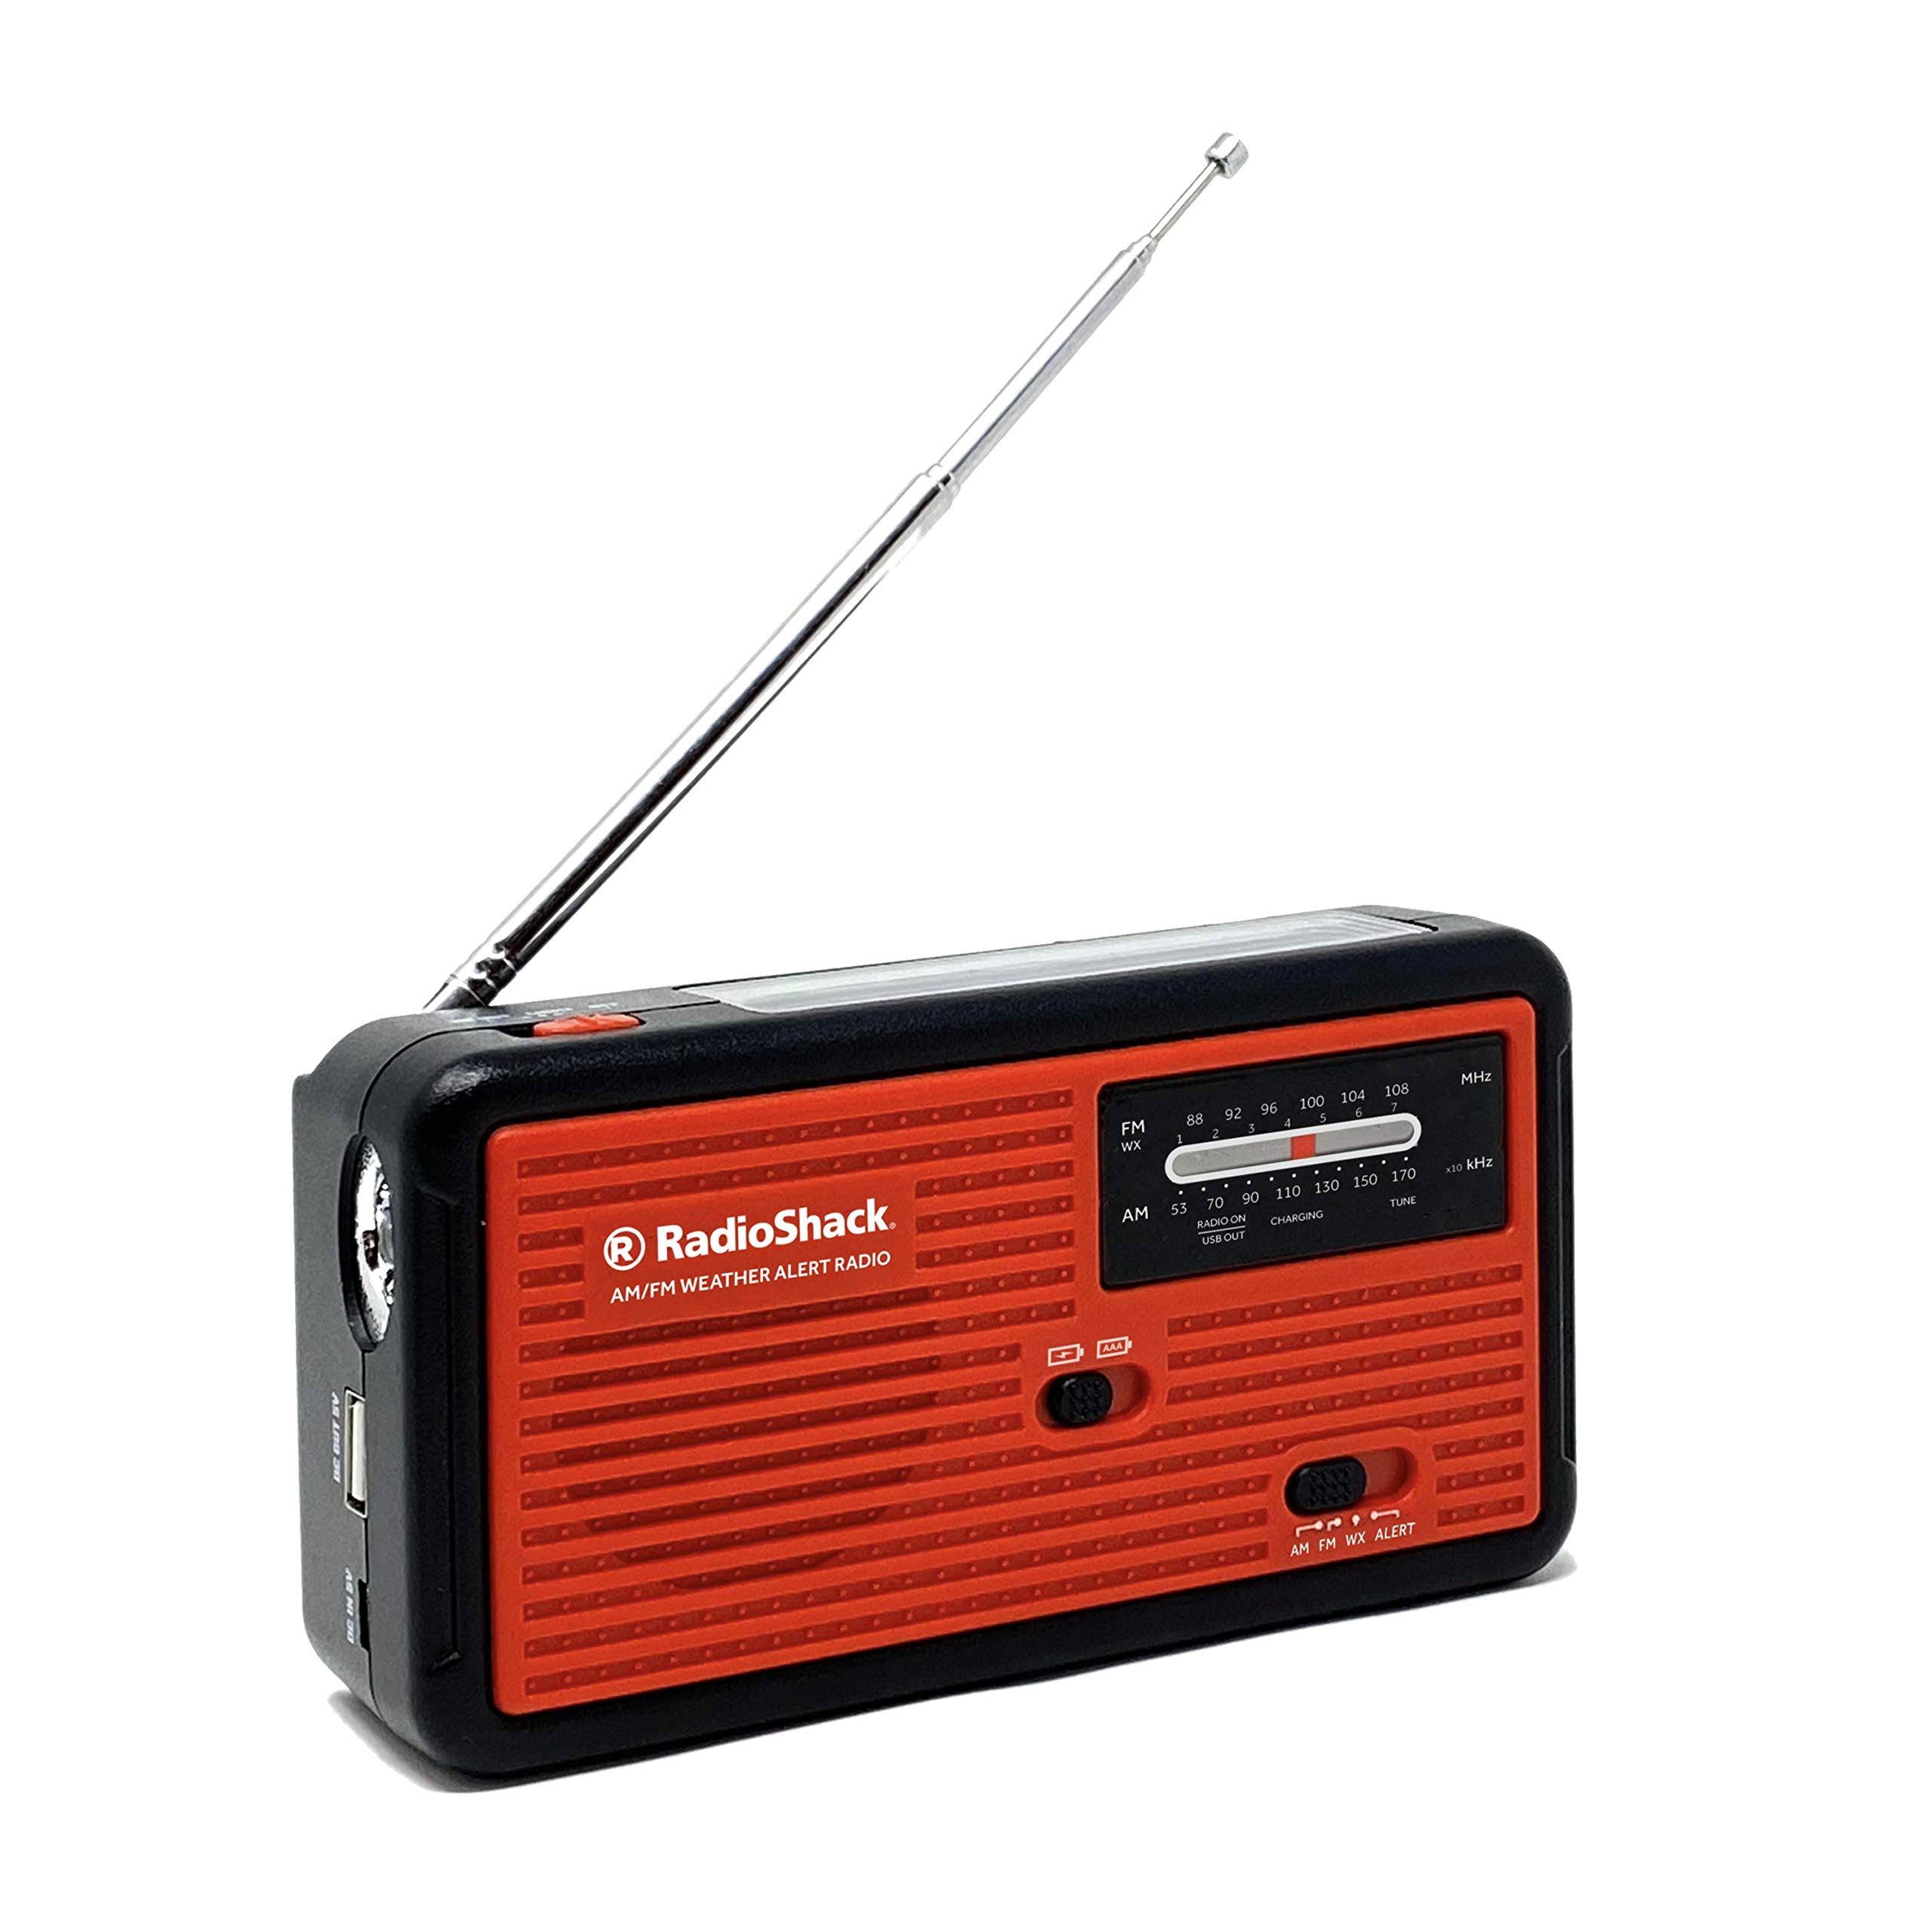 RadioShack AM/FM/WX Emergency Crank Radio with NOAA Weather Alert - Built-in Solar Panel, Flashlight, and USB Charger